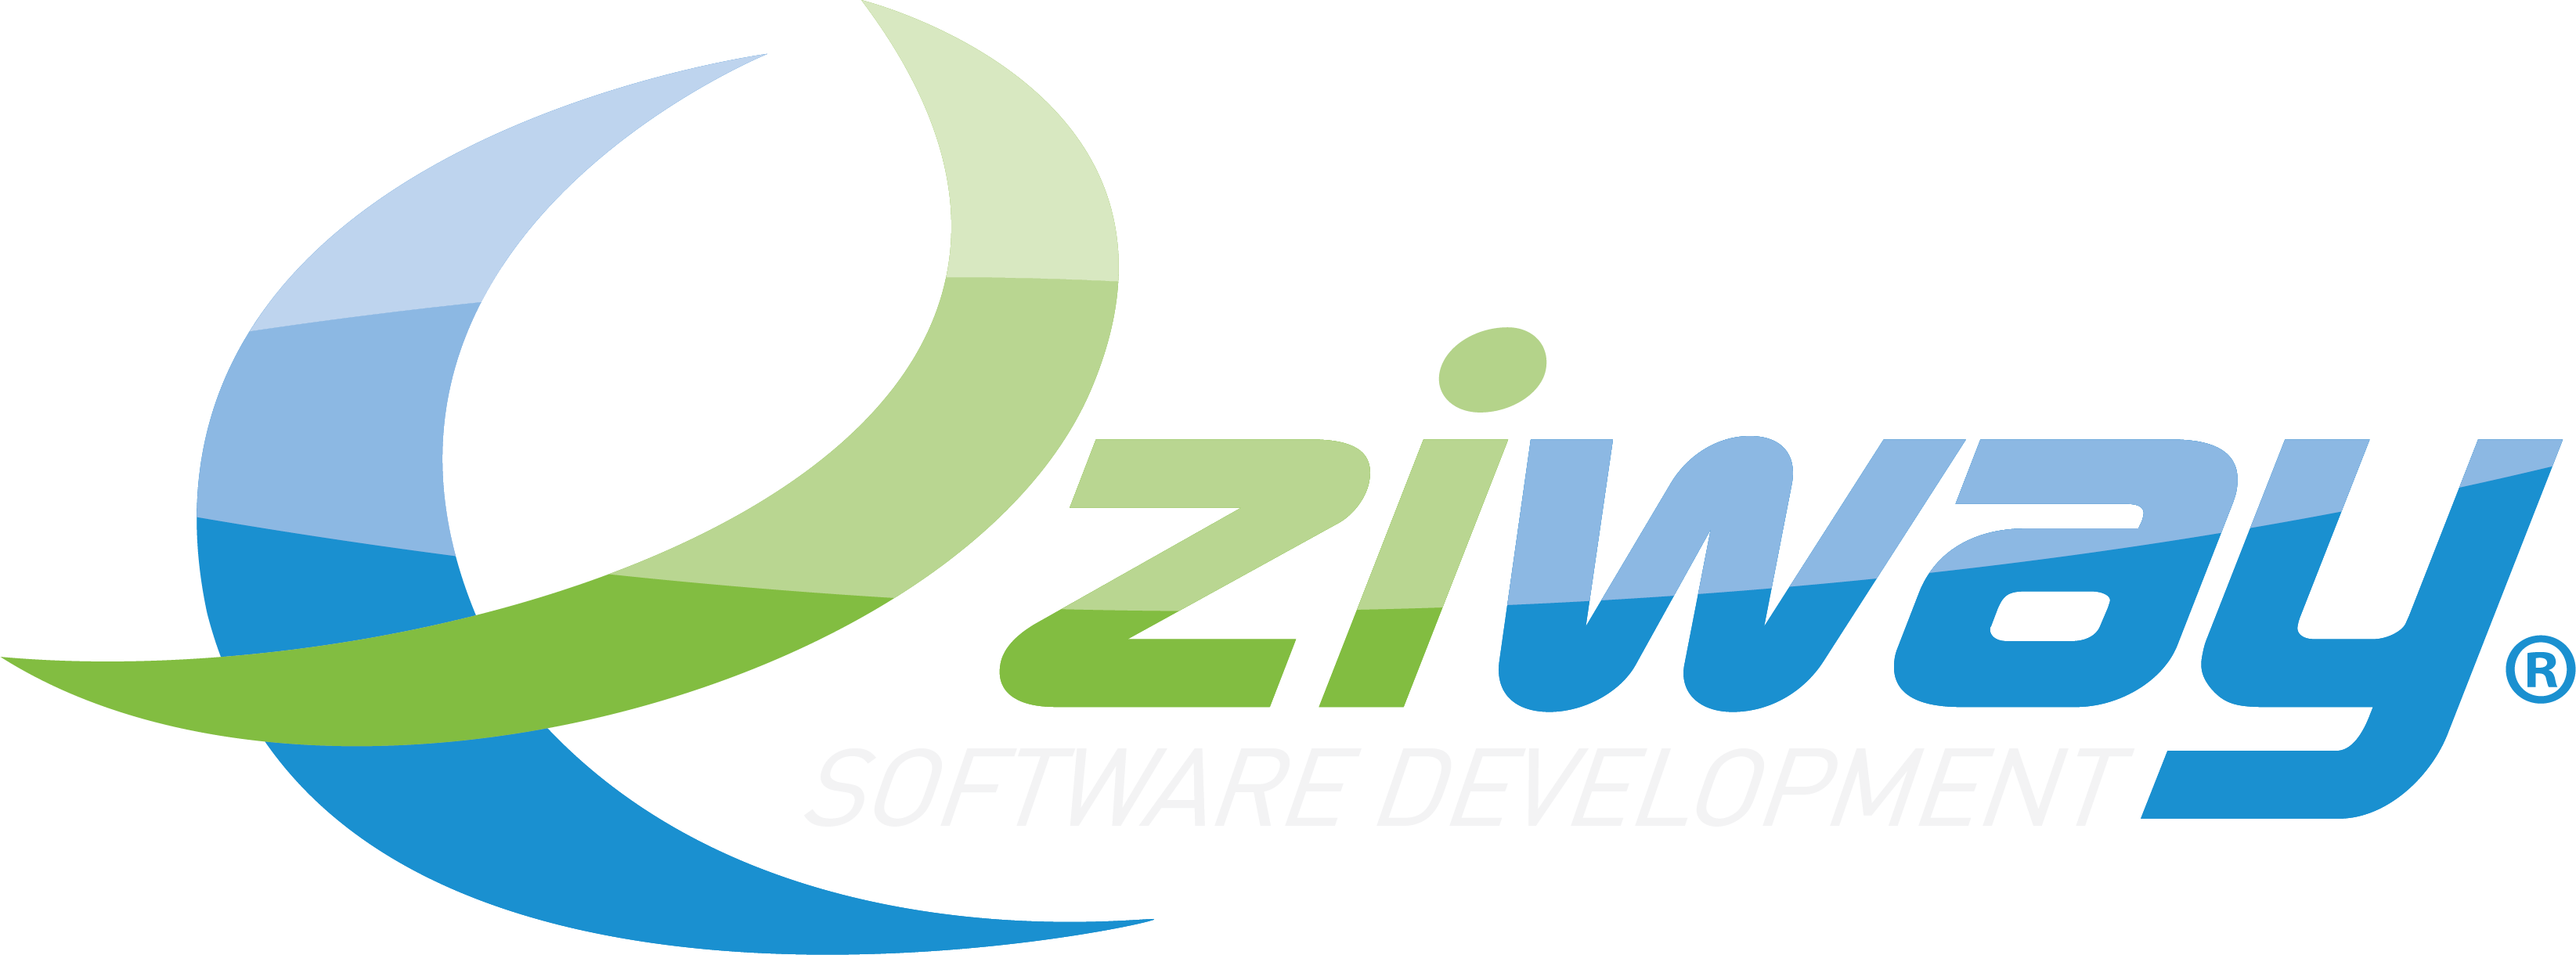 Eziway Software Development